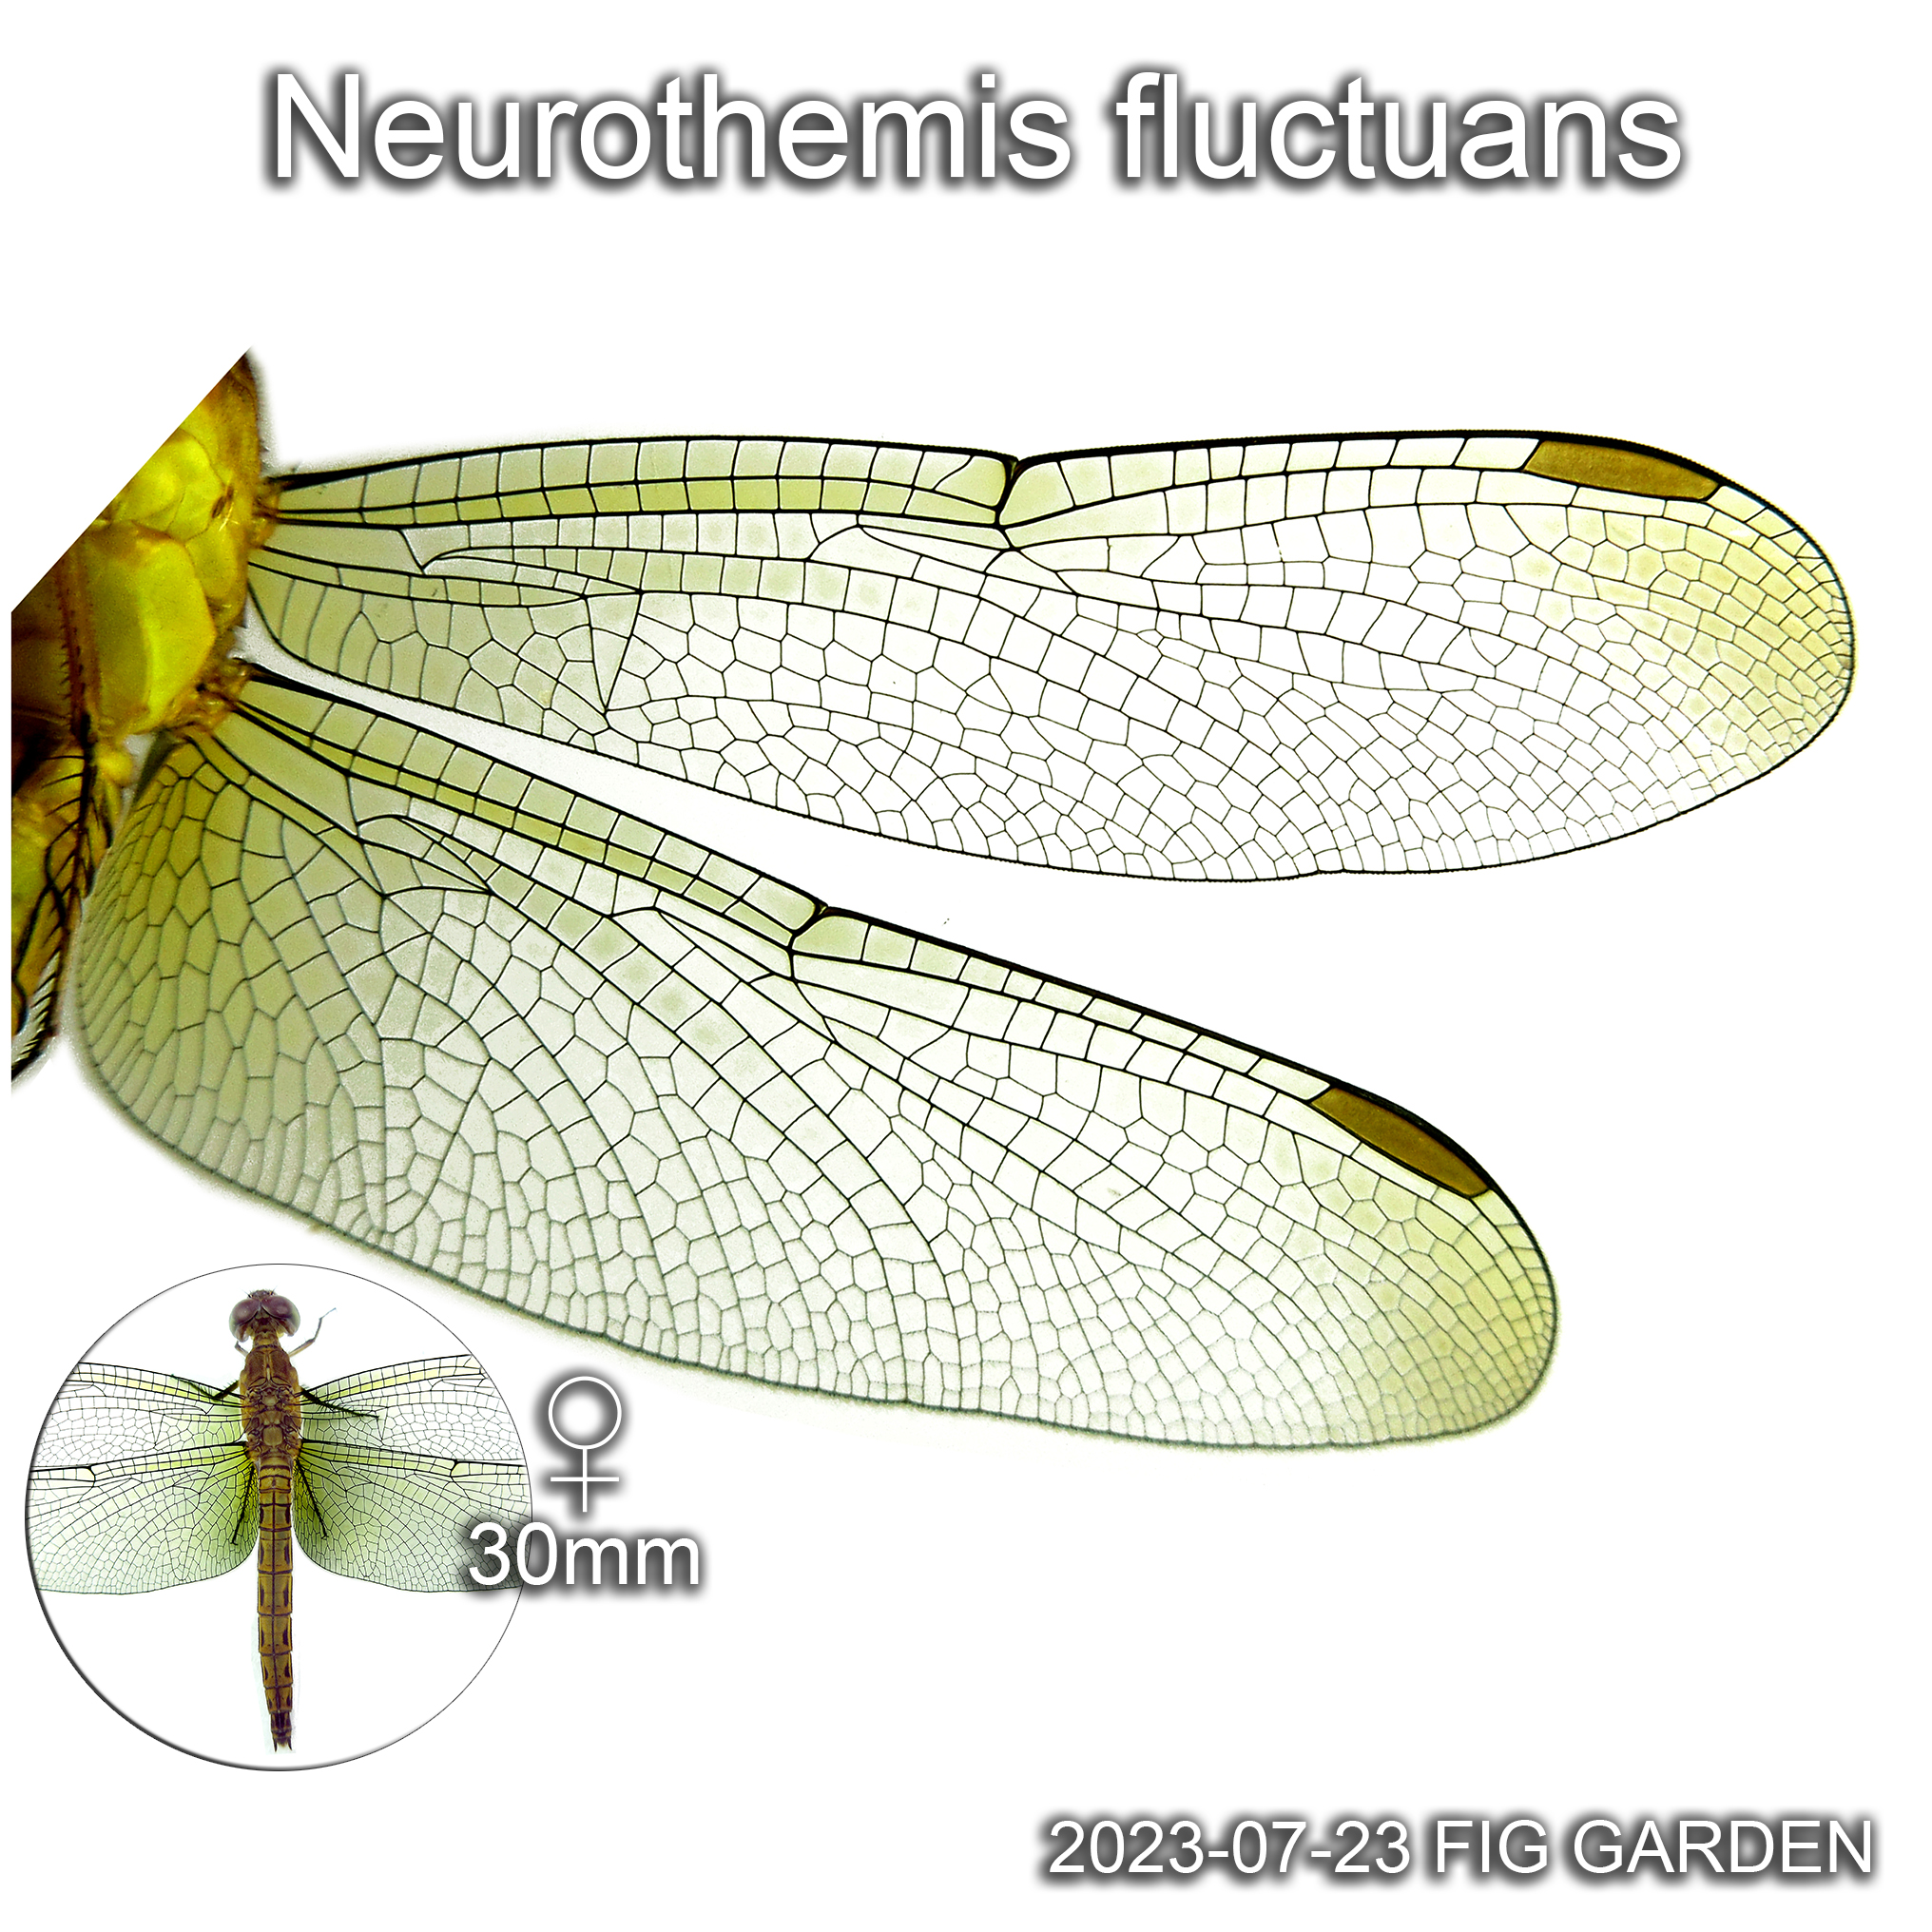 Wing venation of a female Neurothemis fluctuans ♀30mm 